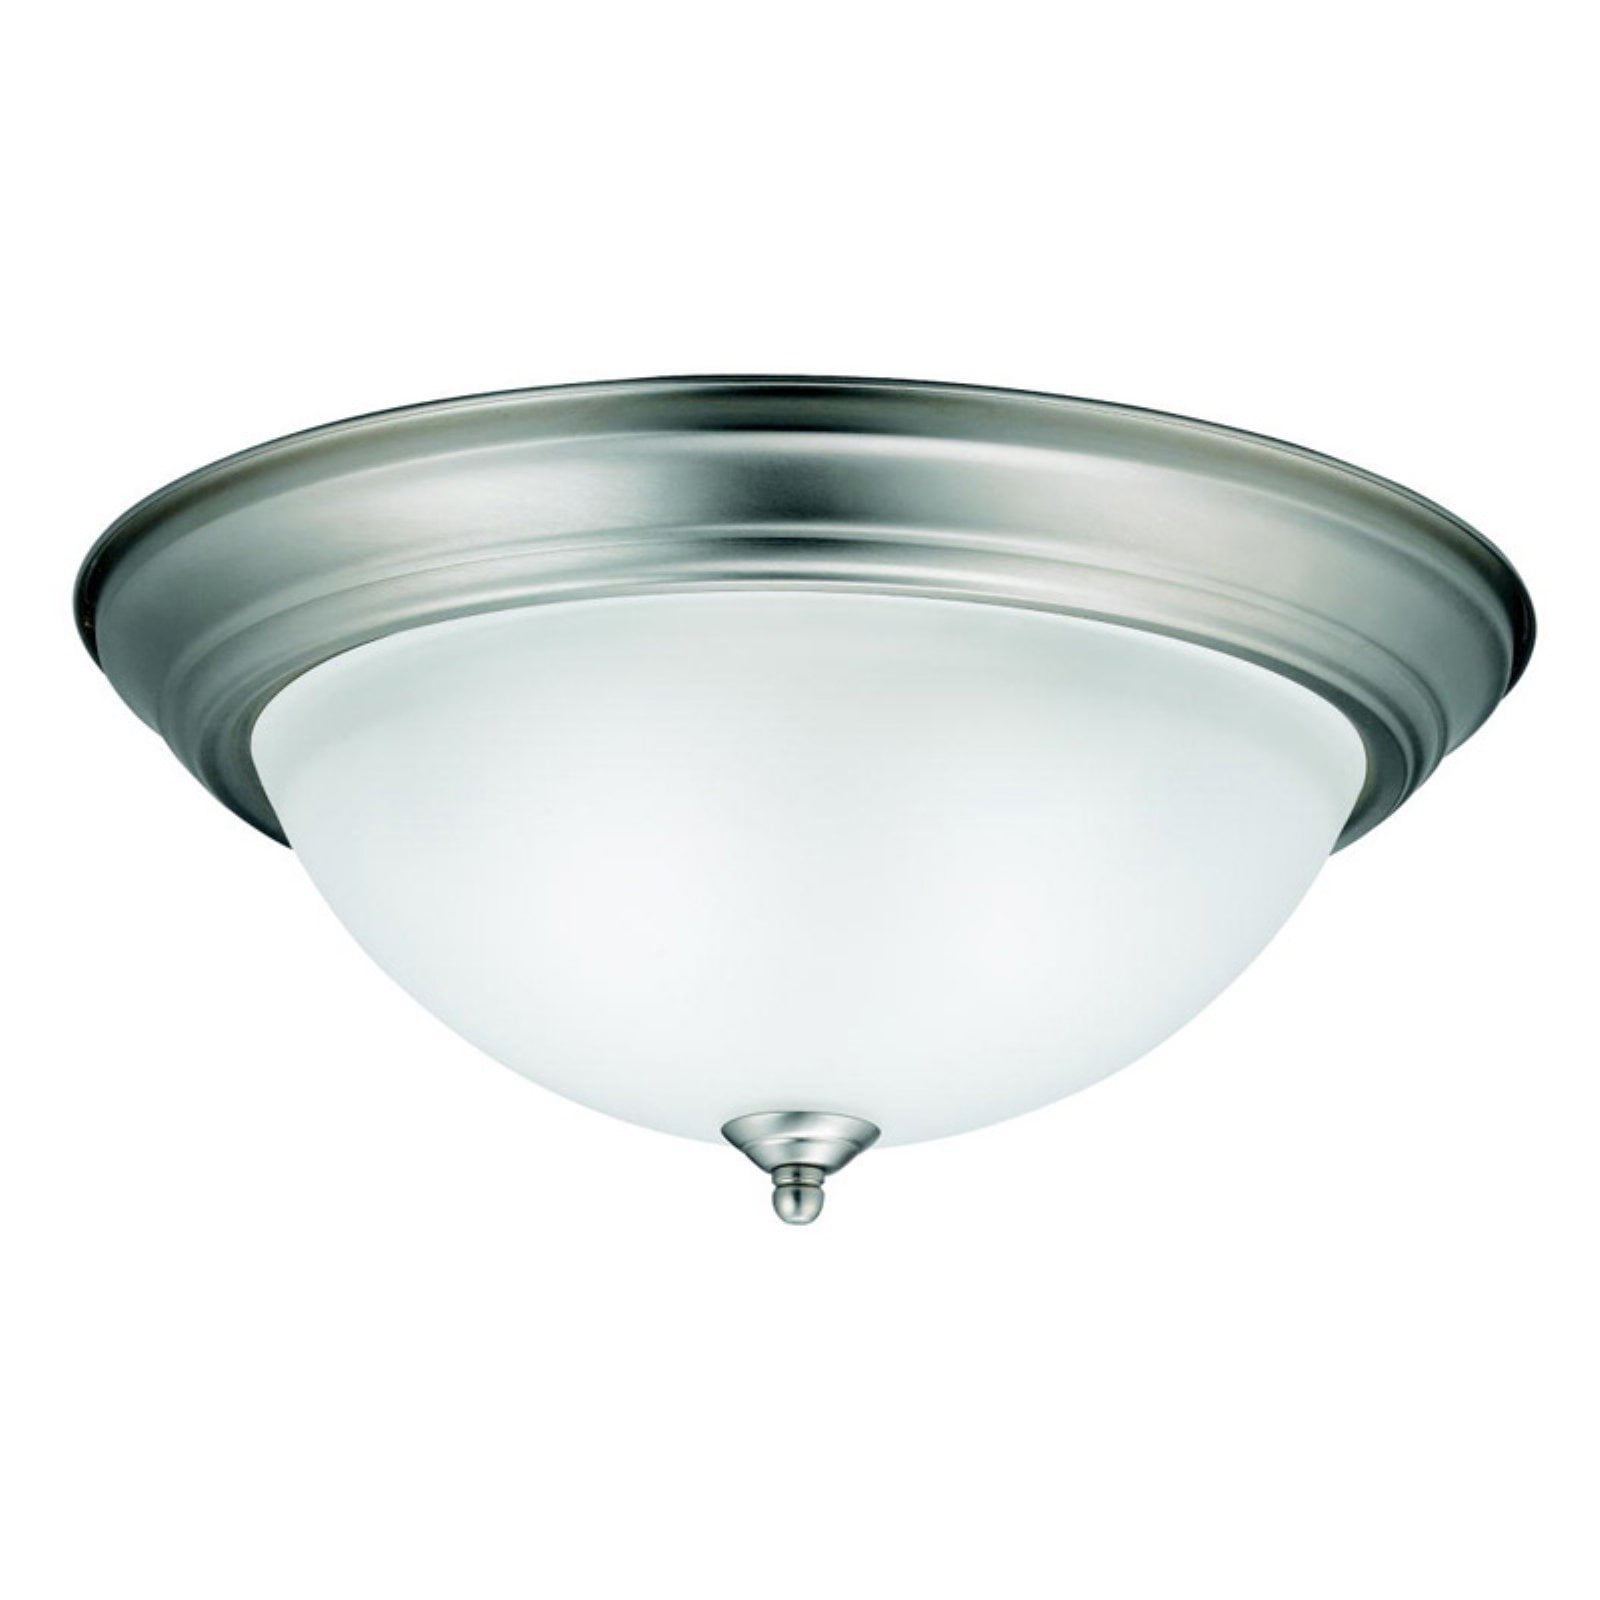 Kichler 8110 Bronze 3-Light 16"W Flush Mount Ceiling Fixture 